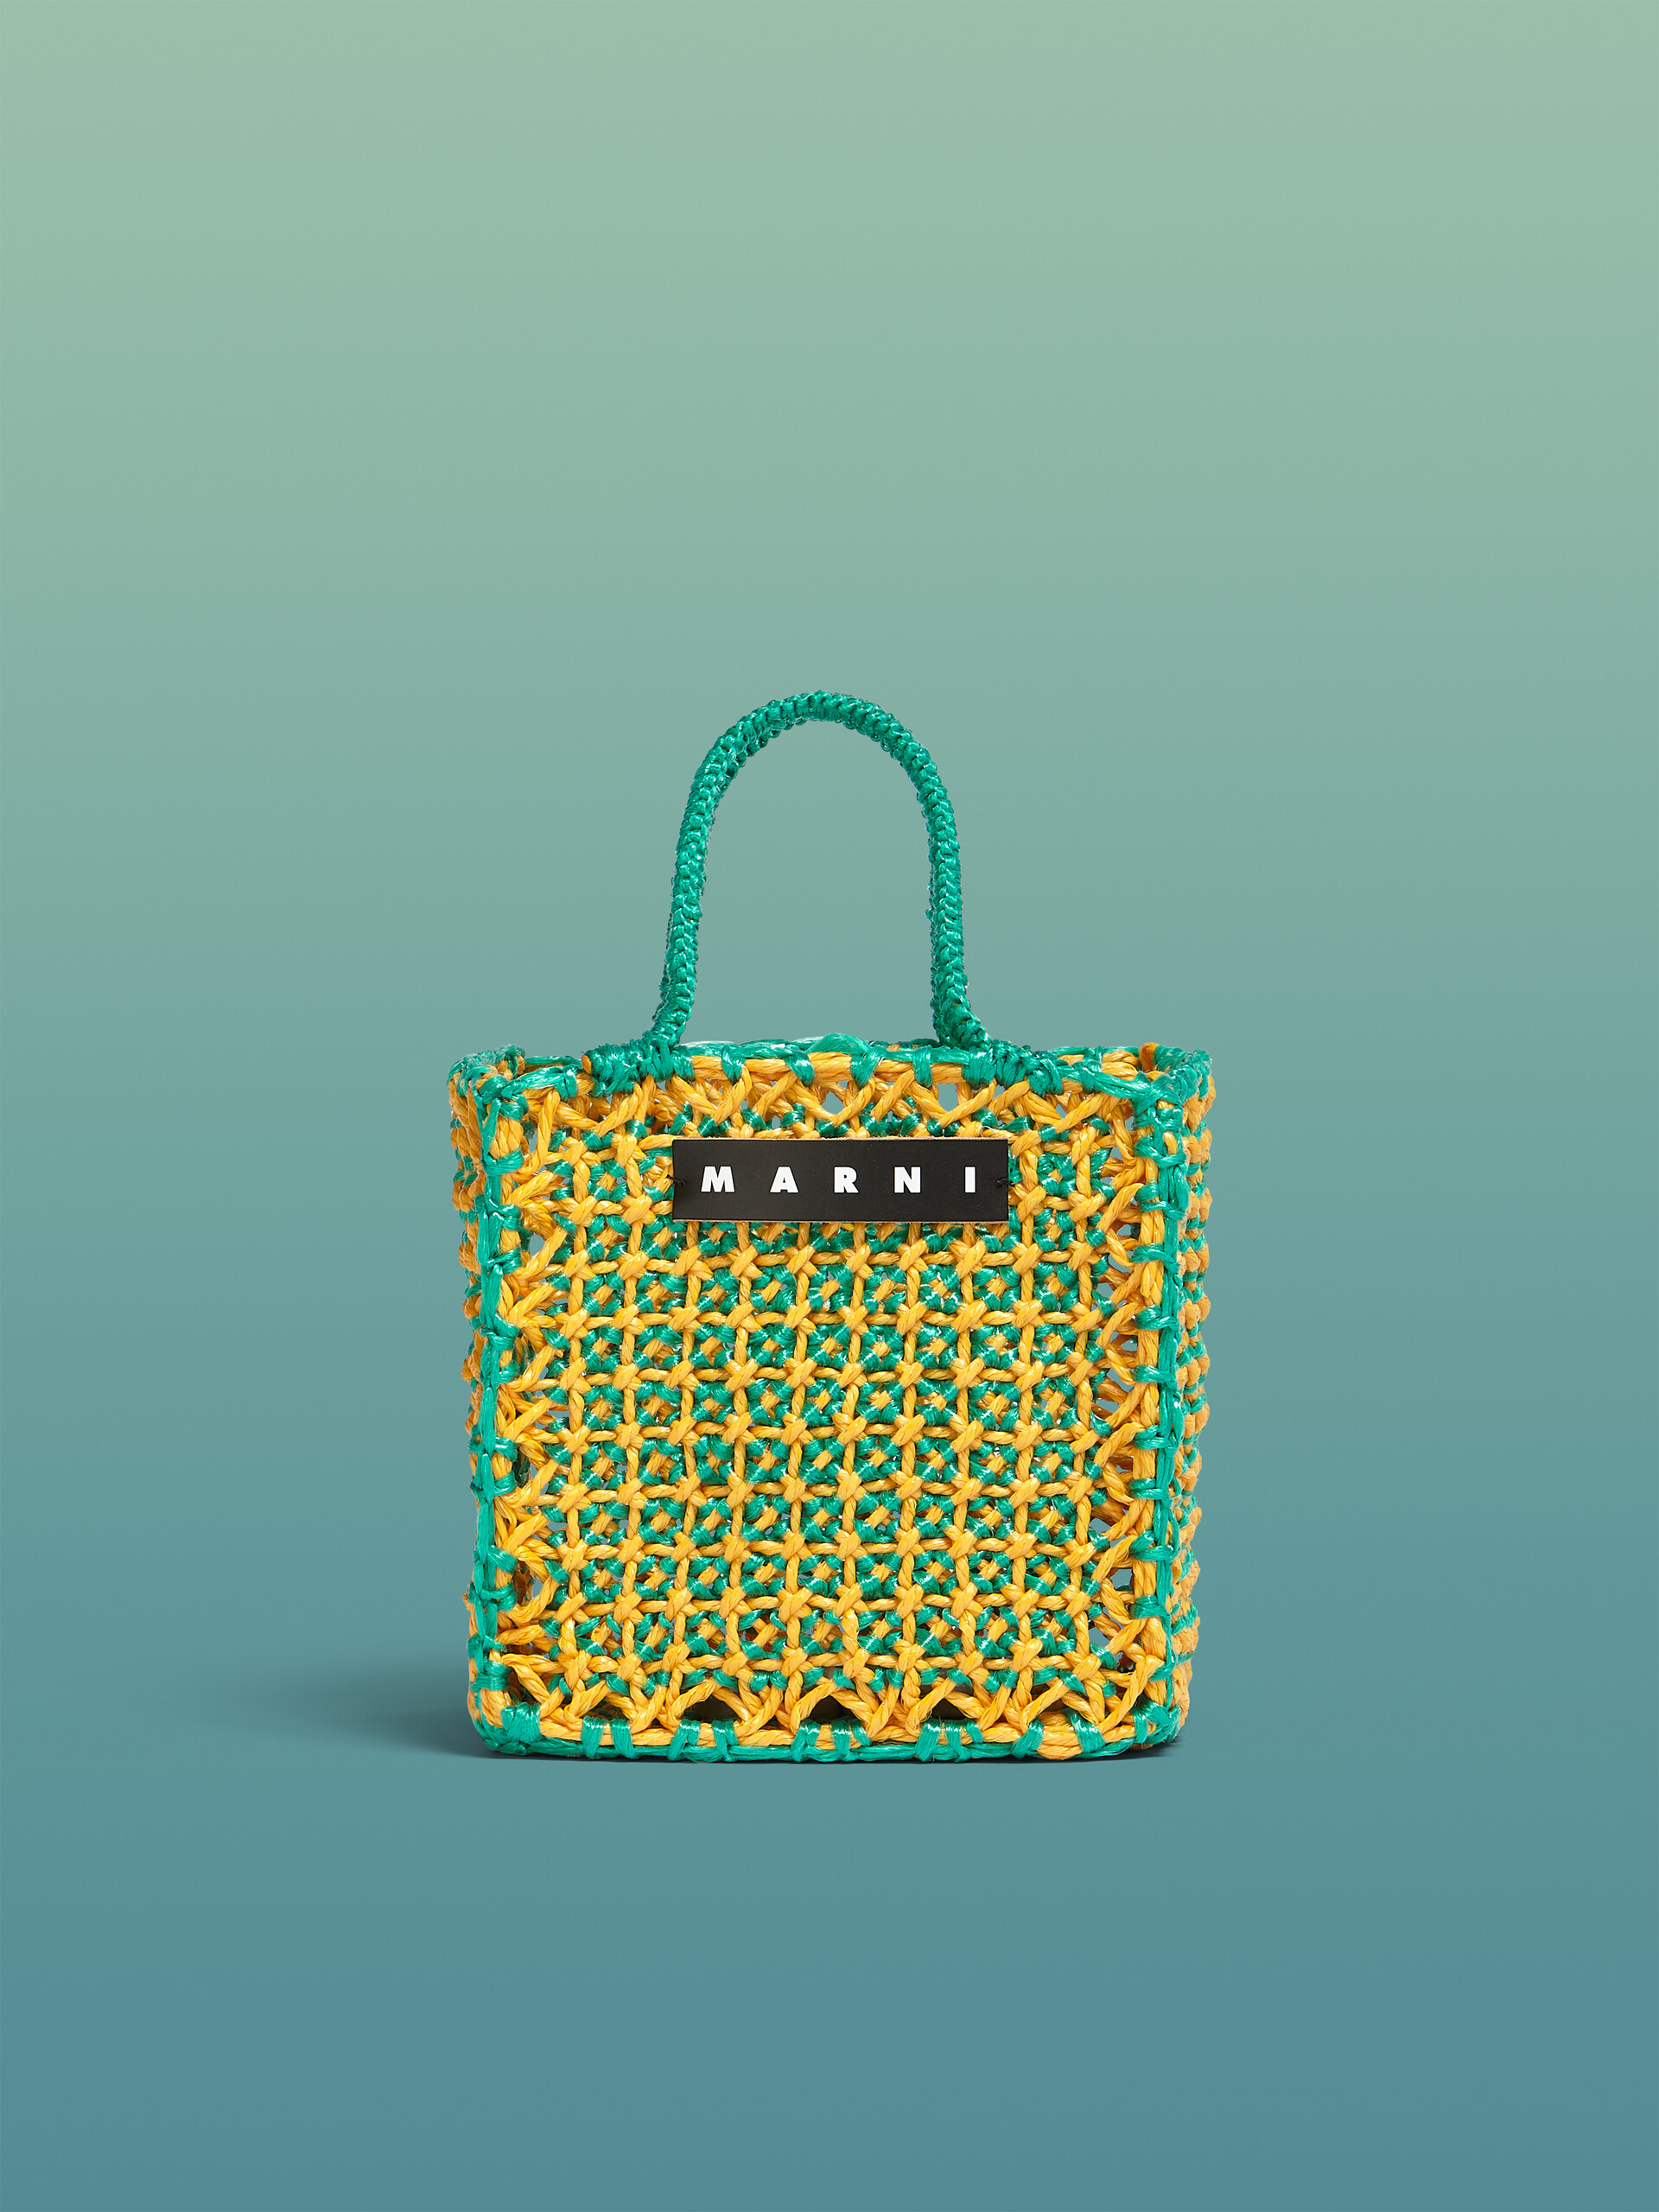 MARNI MARKET JURTA small bag in green and yellow crochet - Bags - Image 1